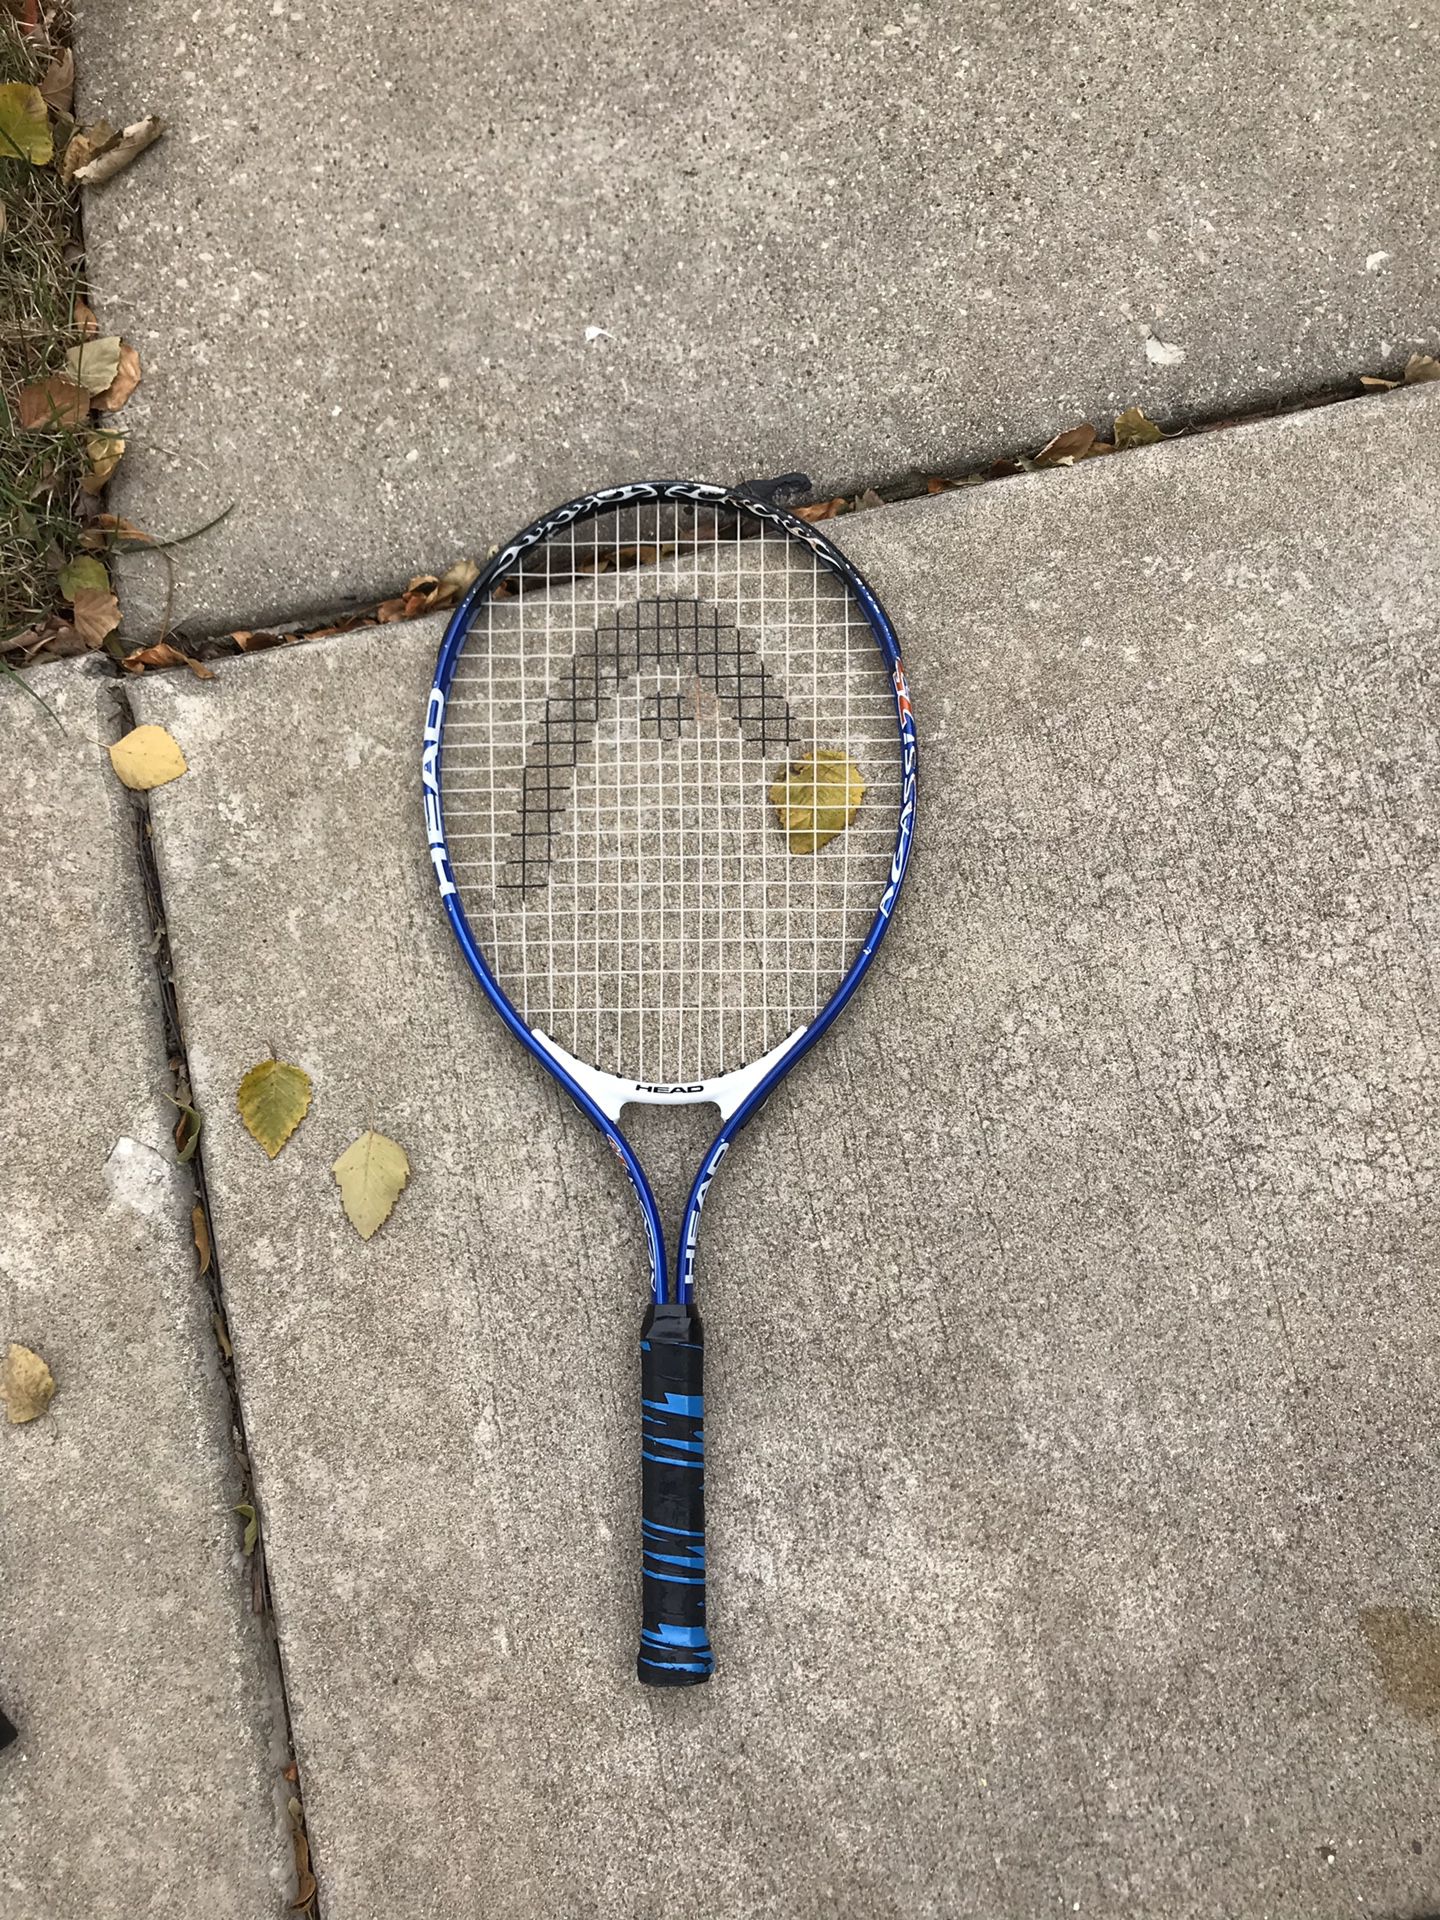 Child’s tennis racket